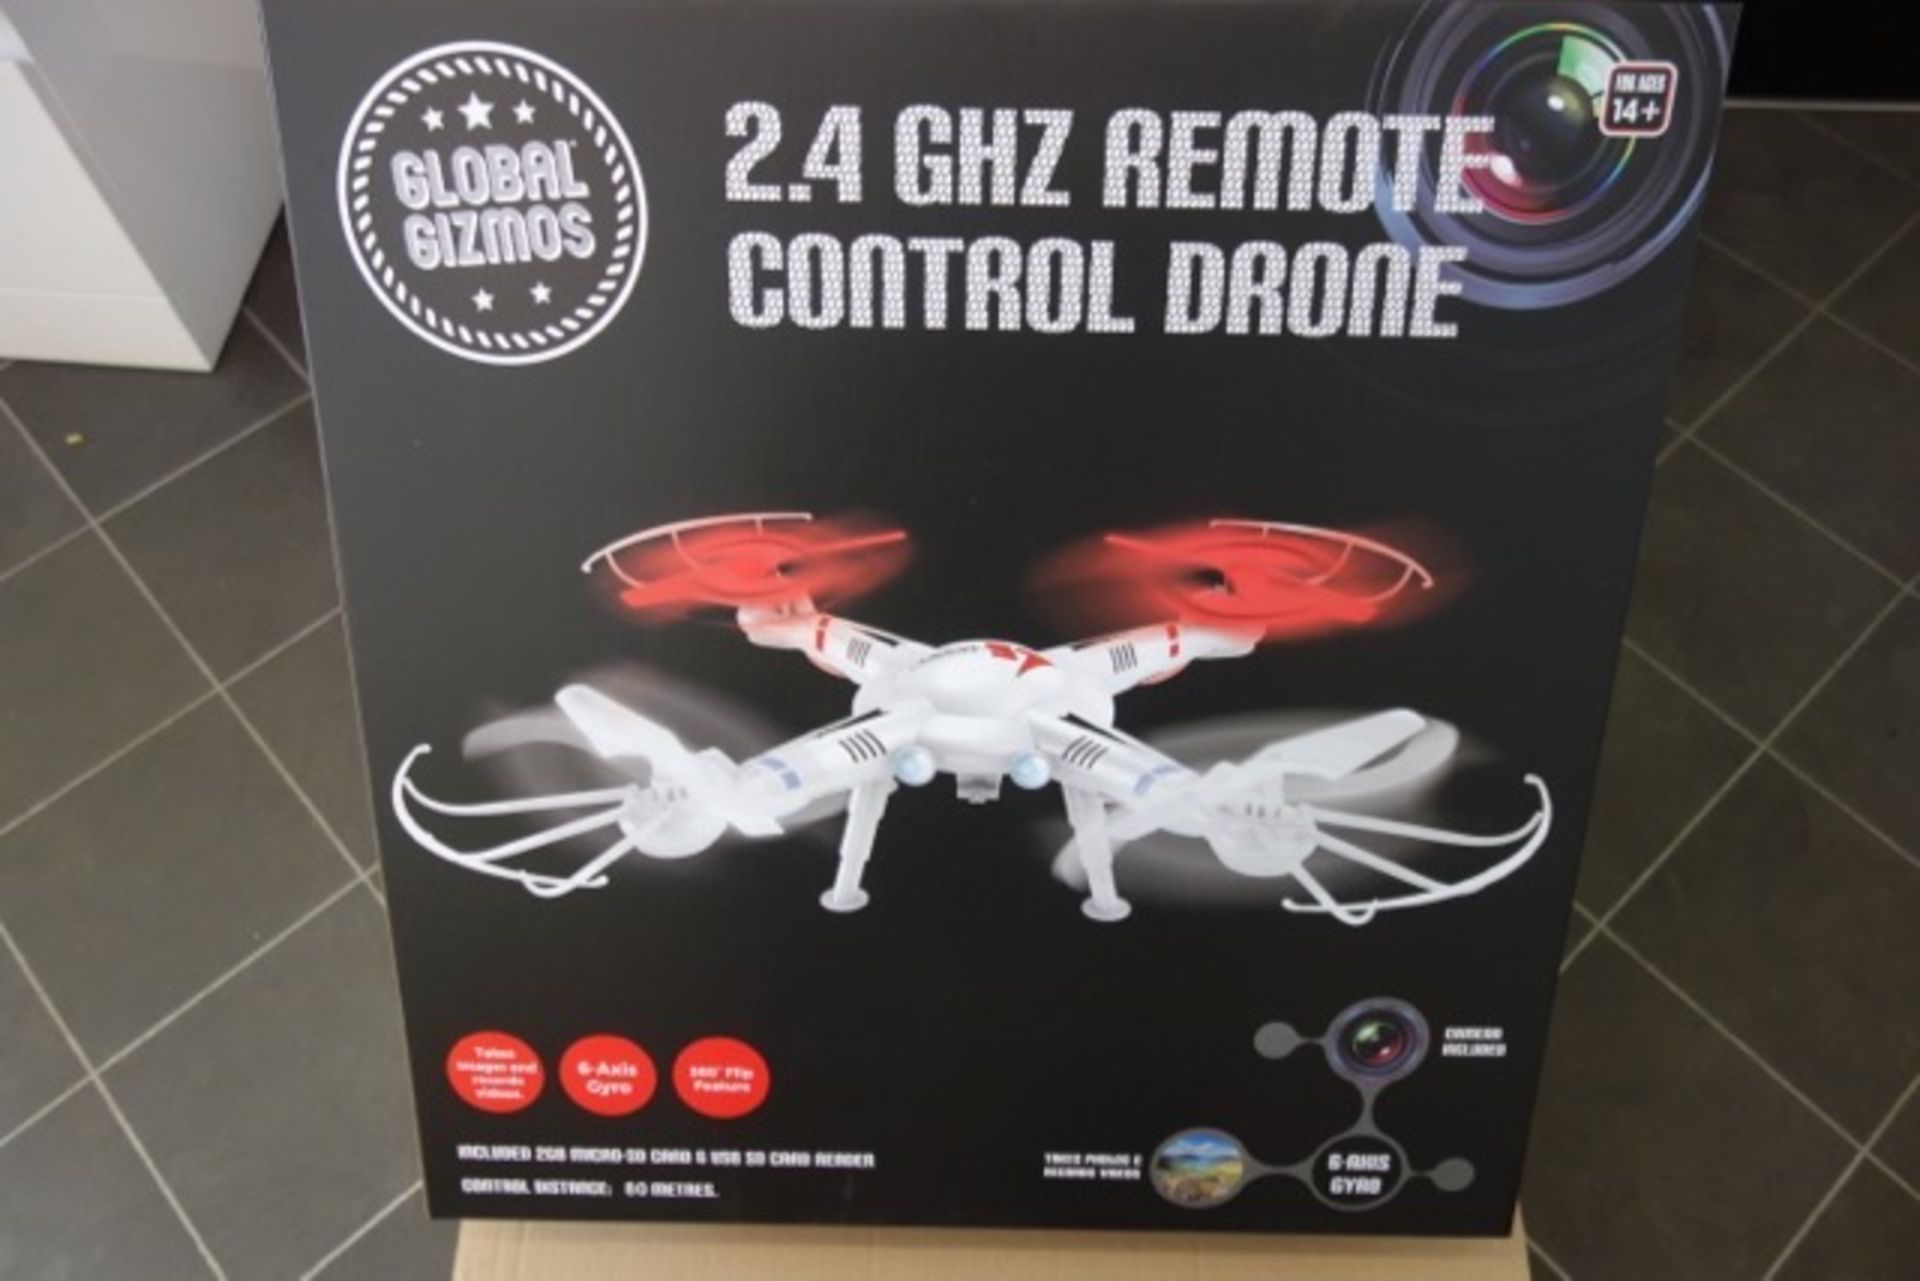 4 x Brand New Global Gizmos 2.4GHZ Remote Control Drone.